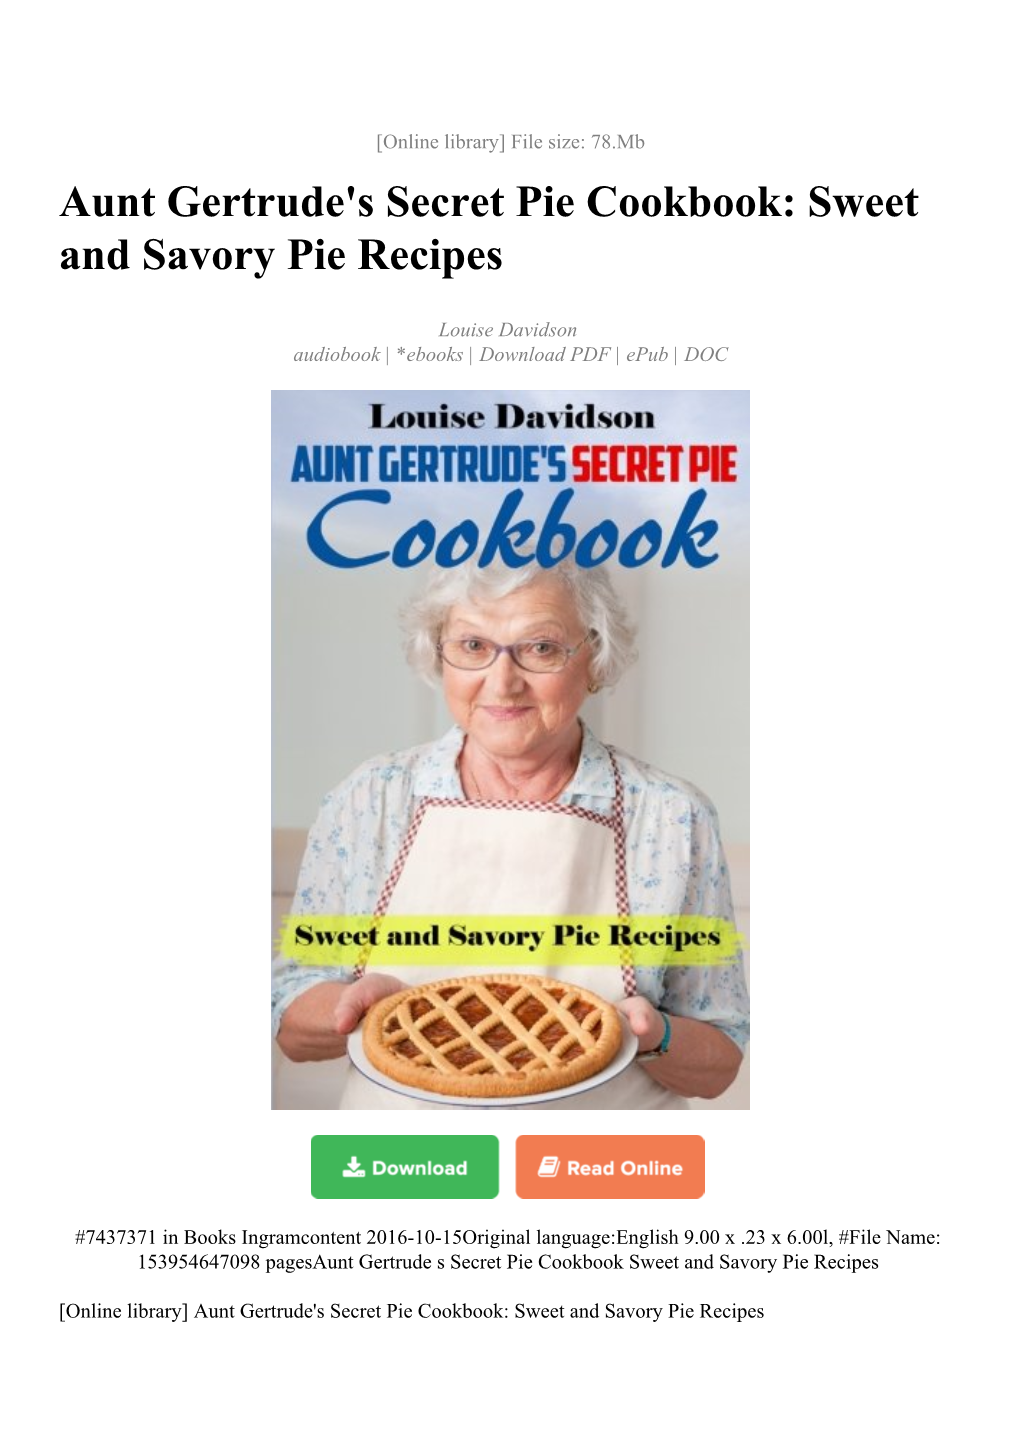 Aunt Gertrude's Secret Pie Cookbook: Sweet and Savory Pie Recipes